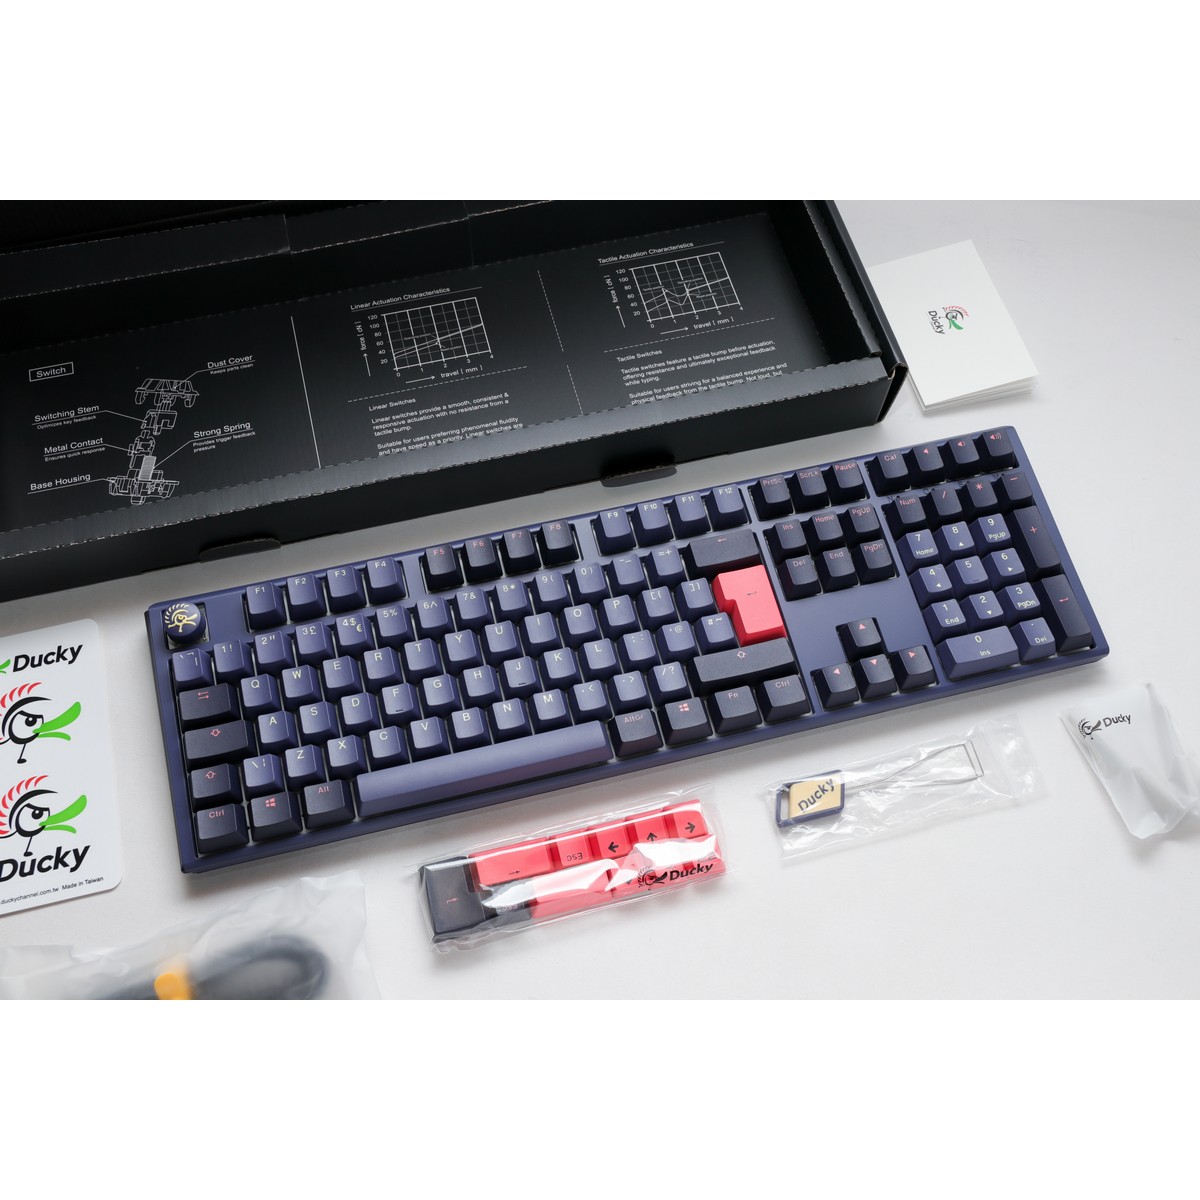 Ducky - Ducky One 3 Cosmic USB RGB Mechanical Gaming Keyboard Cherry MX Blue Switch - UK Layout